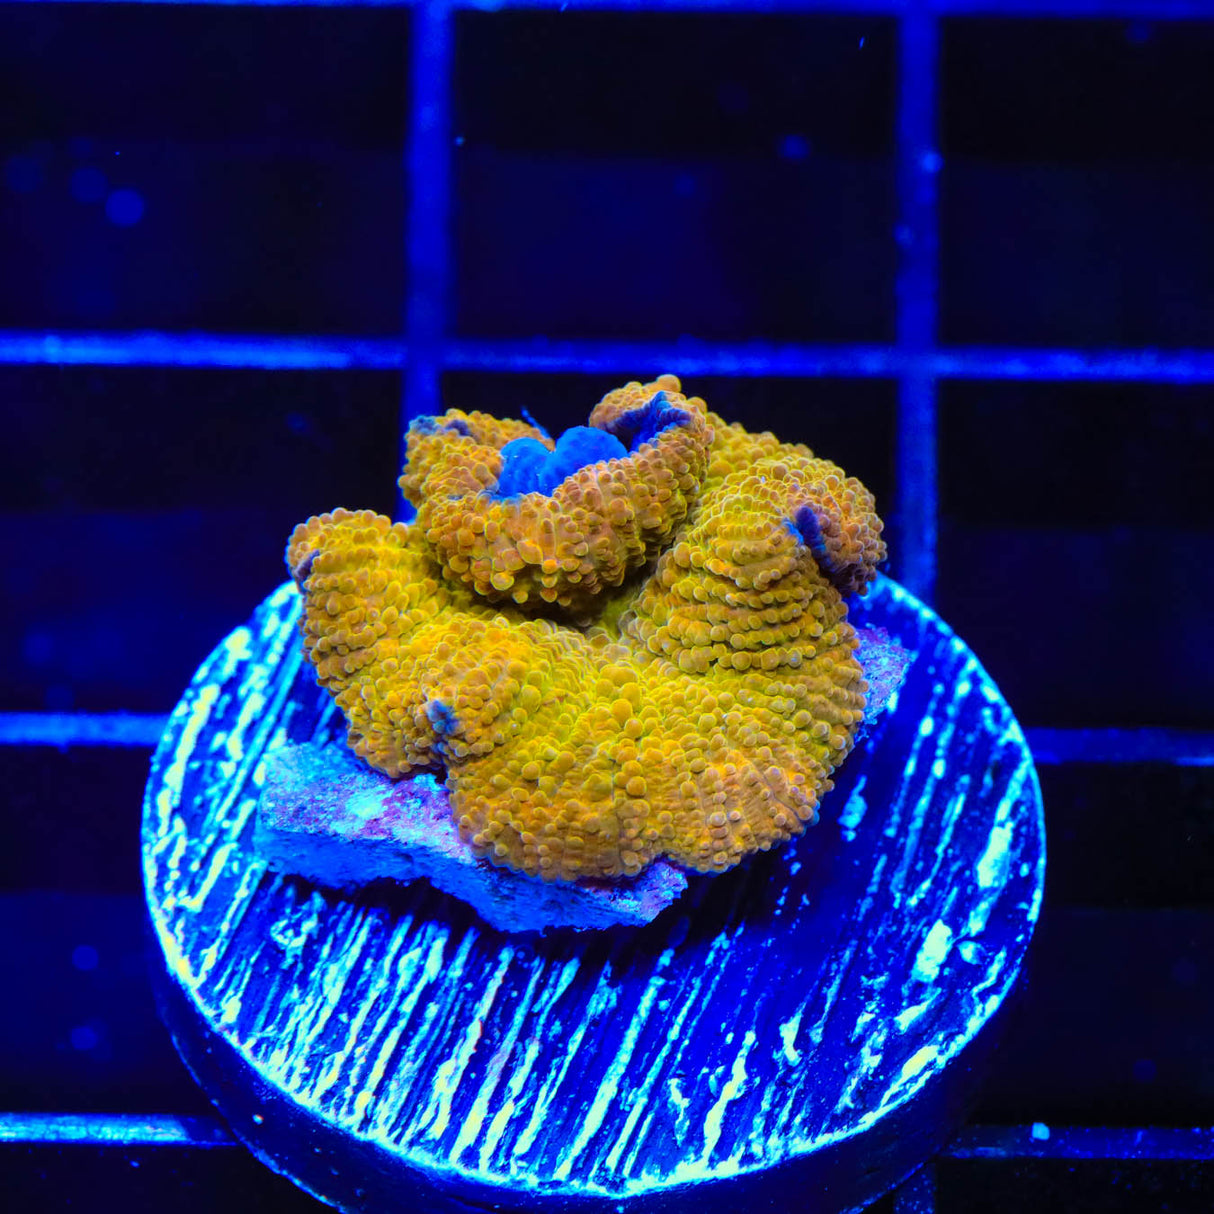 Goldset Mushroom Coral